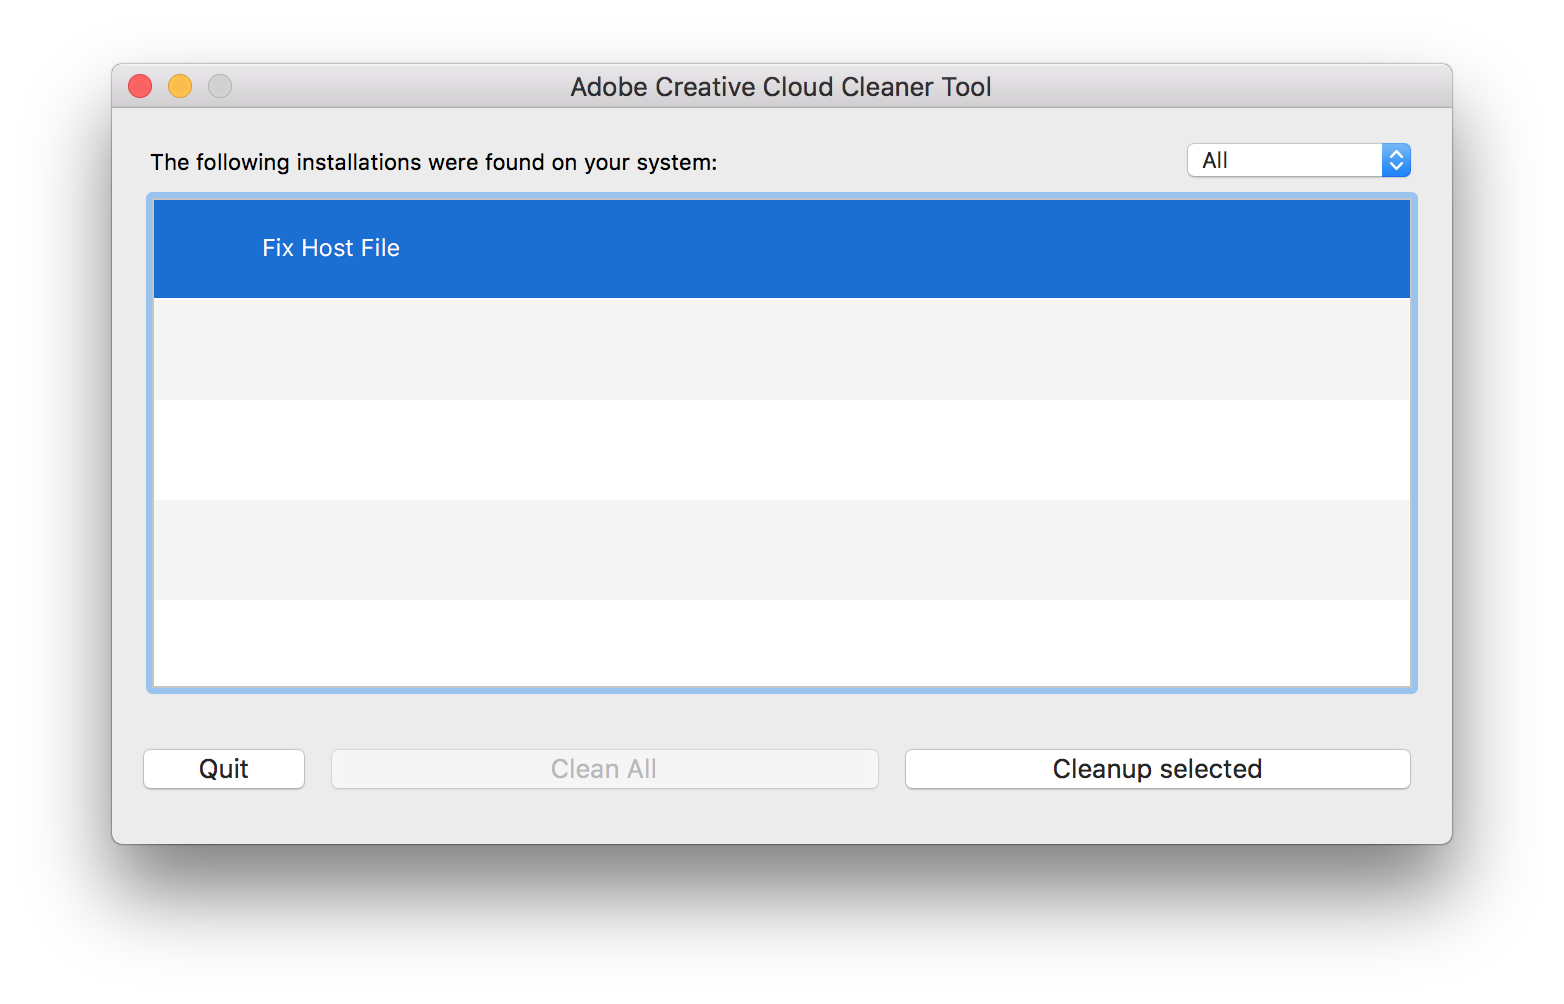 Adobe Creative Cloud Cleaner Tool 2018-10-31 10-49-15.png